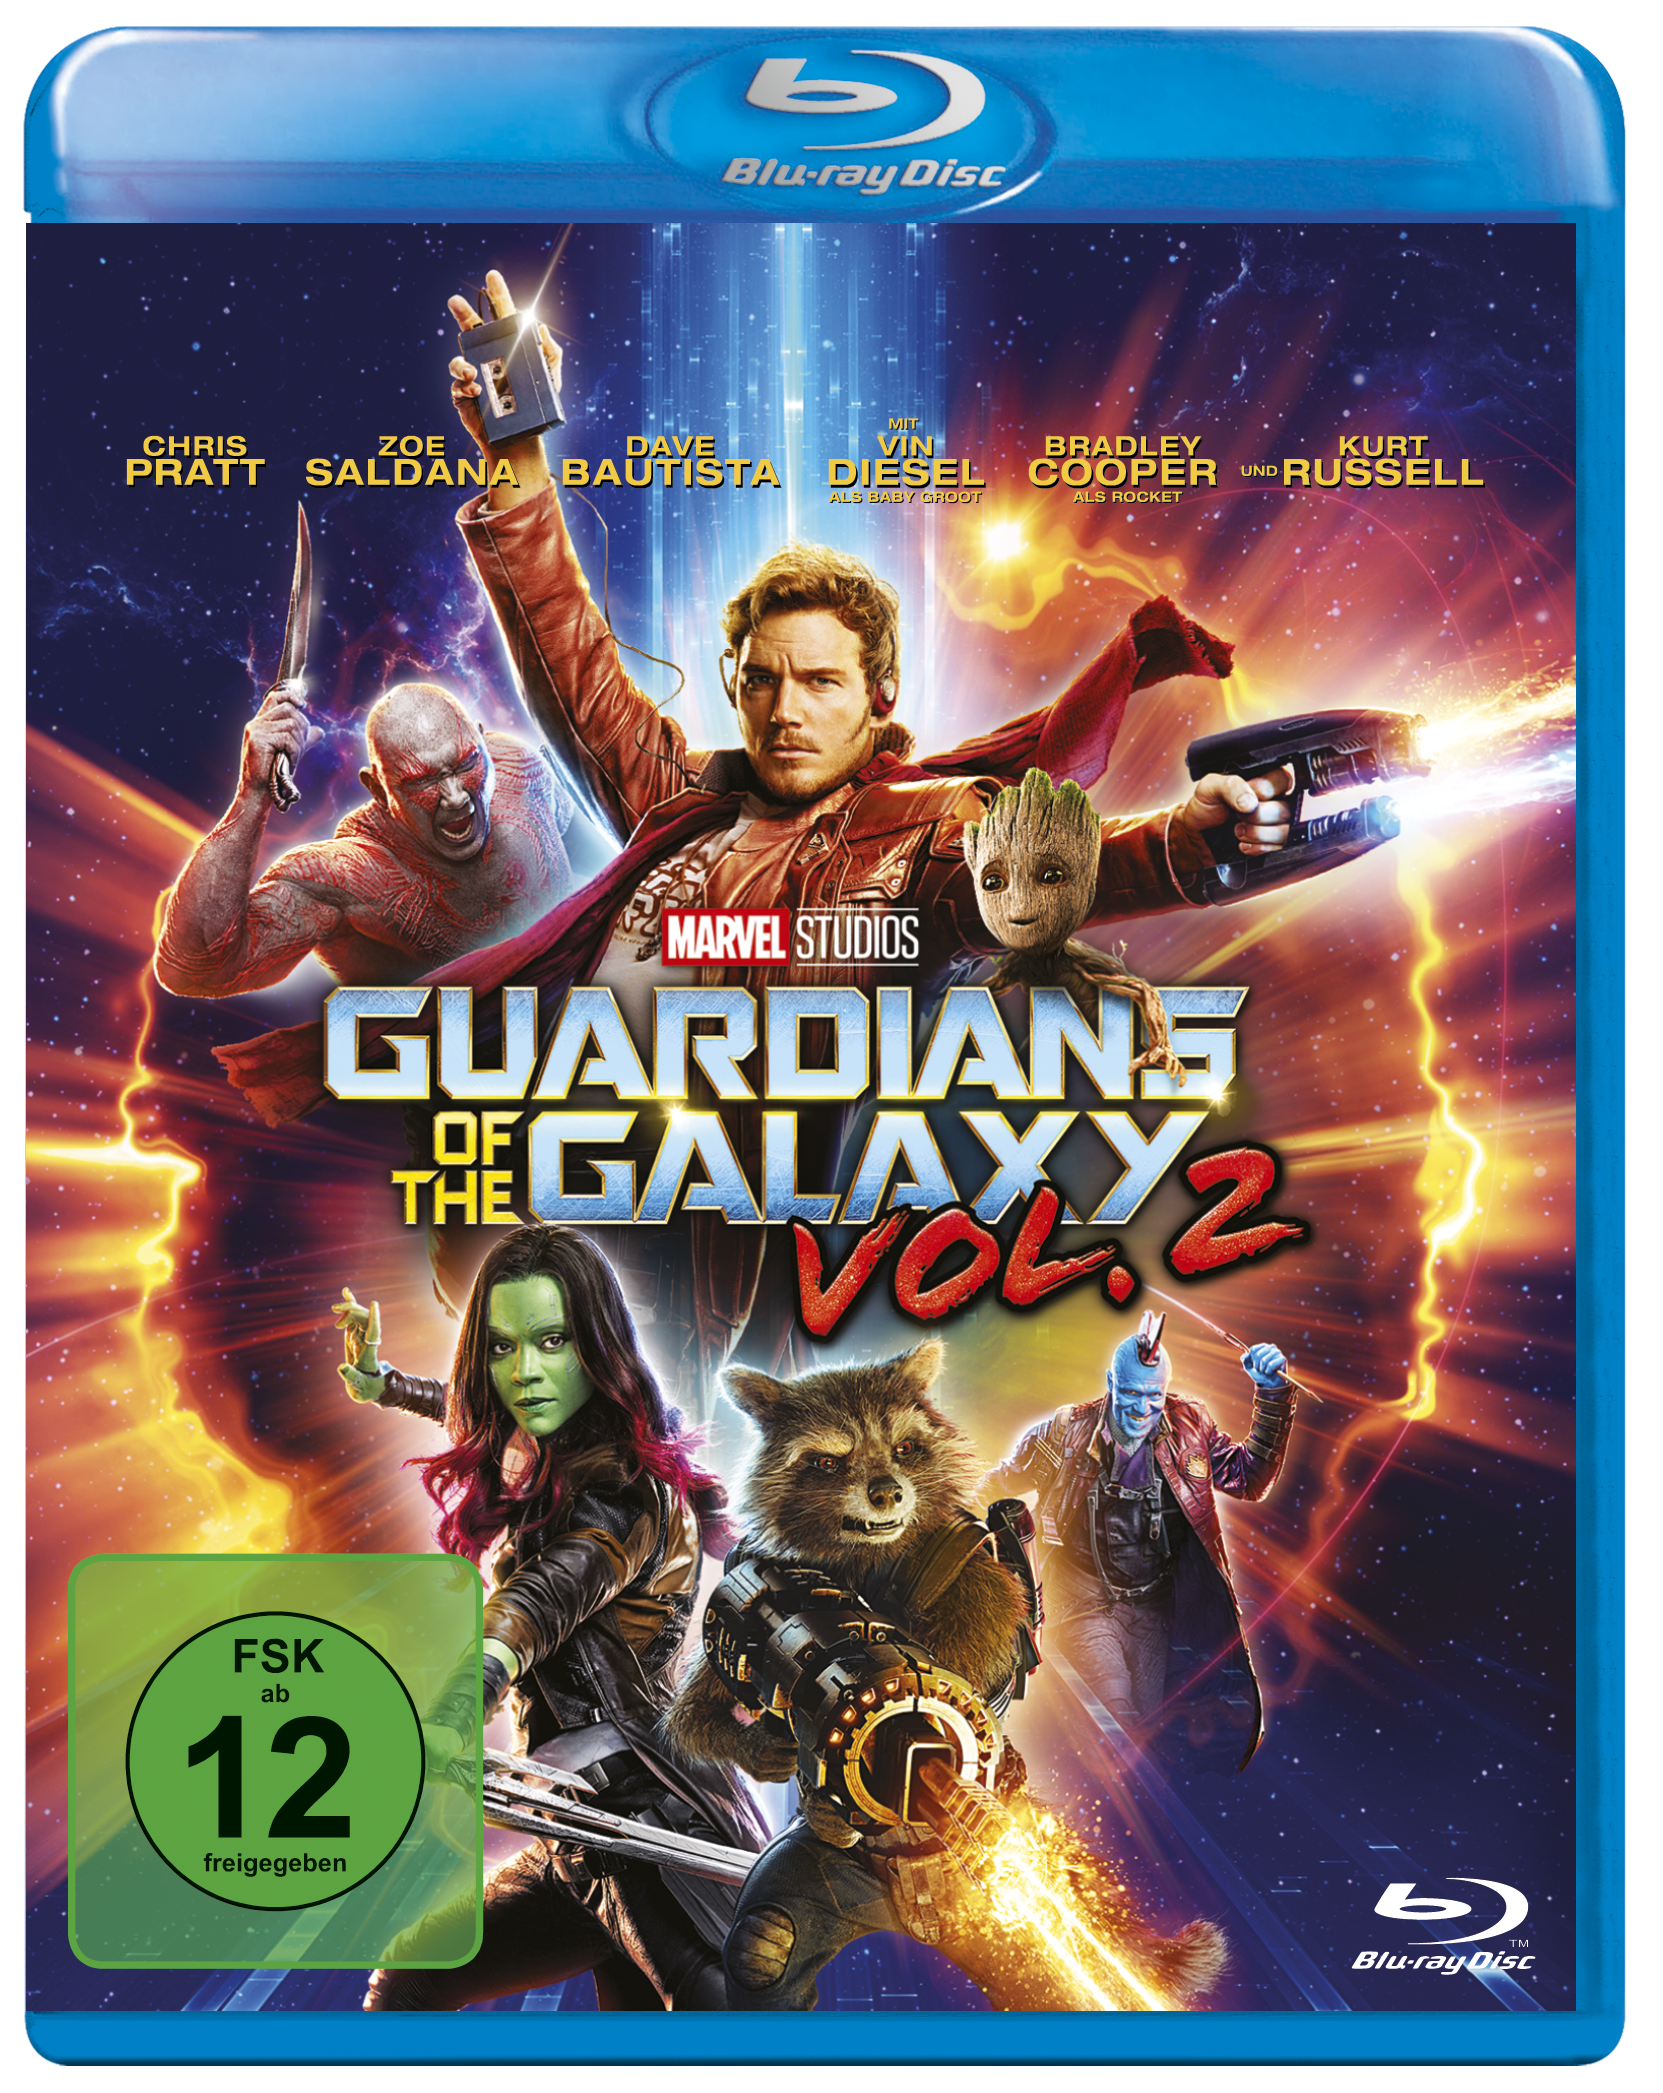 Guardians of the Galaxy Vol. Blu-ray 2